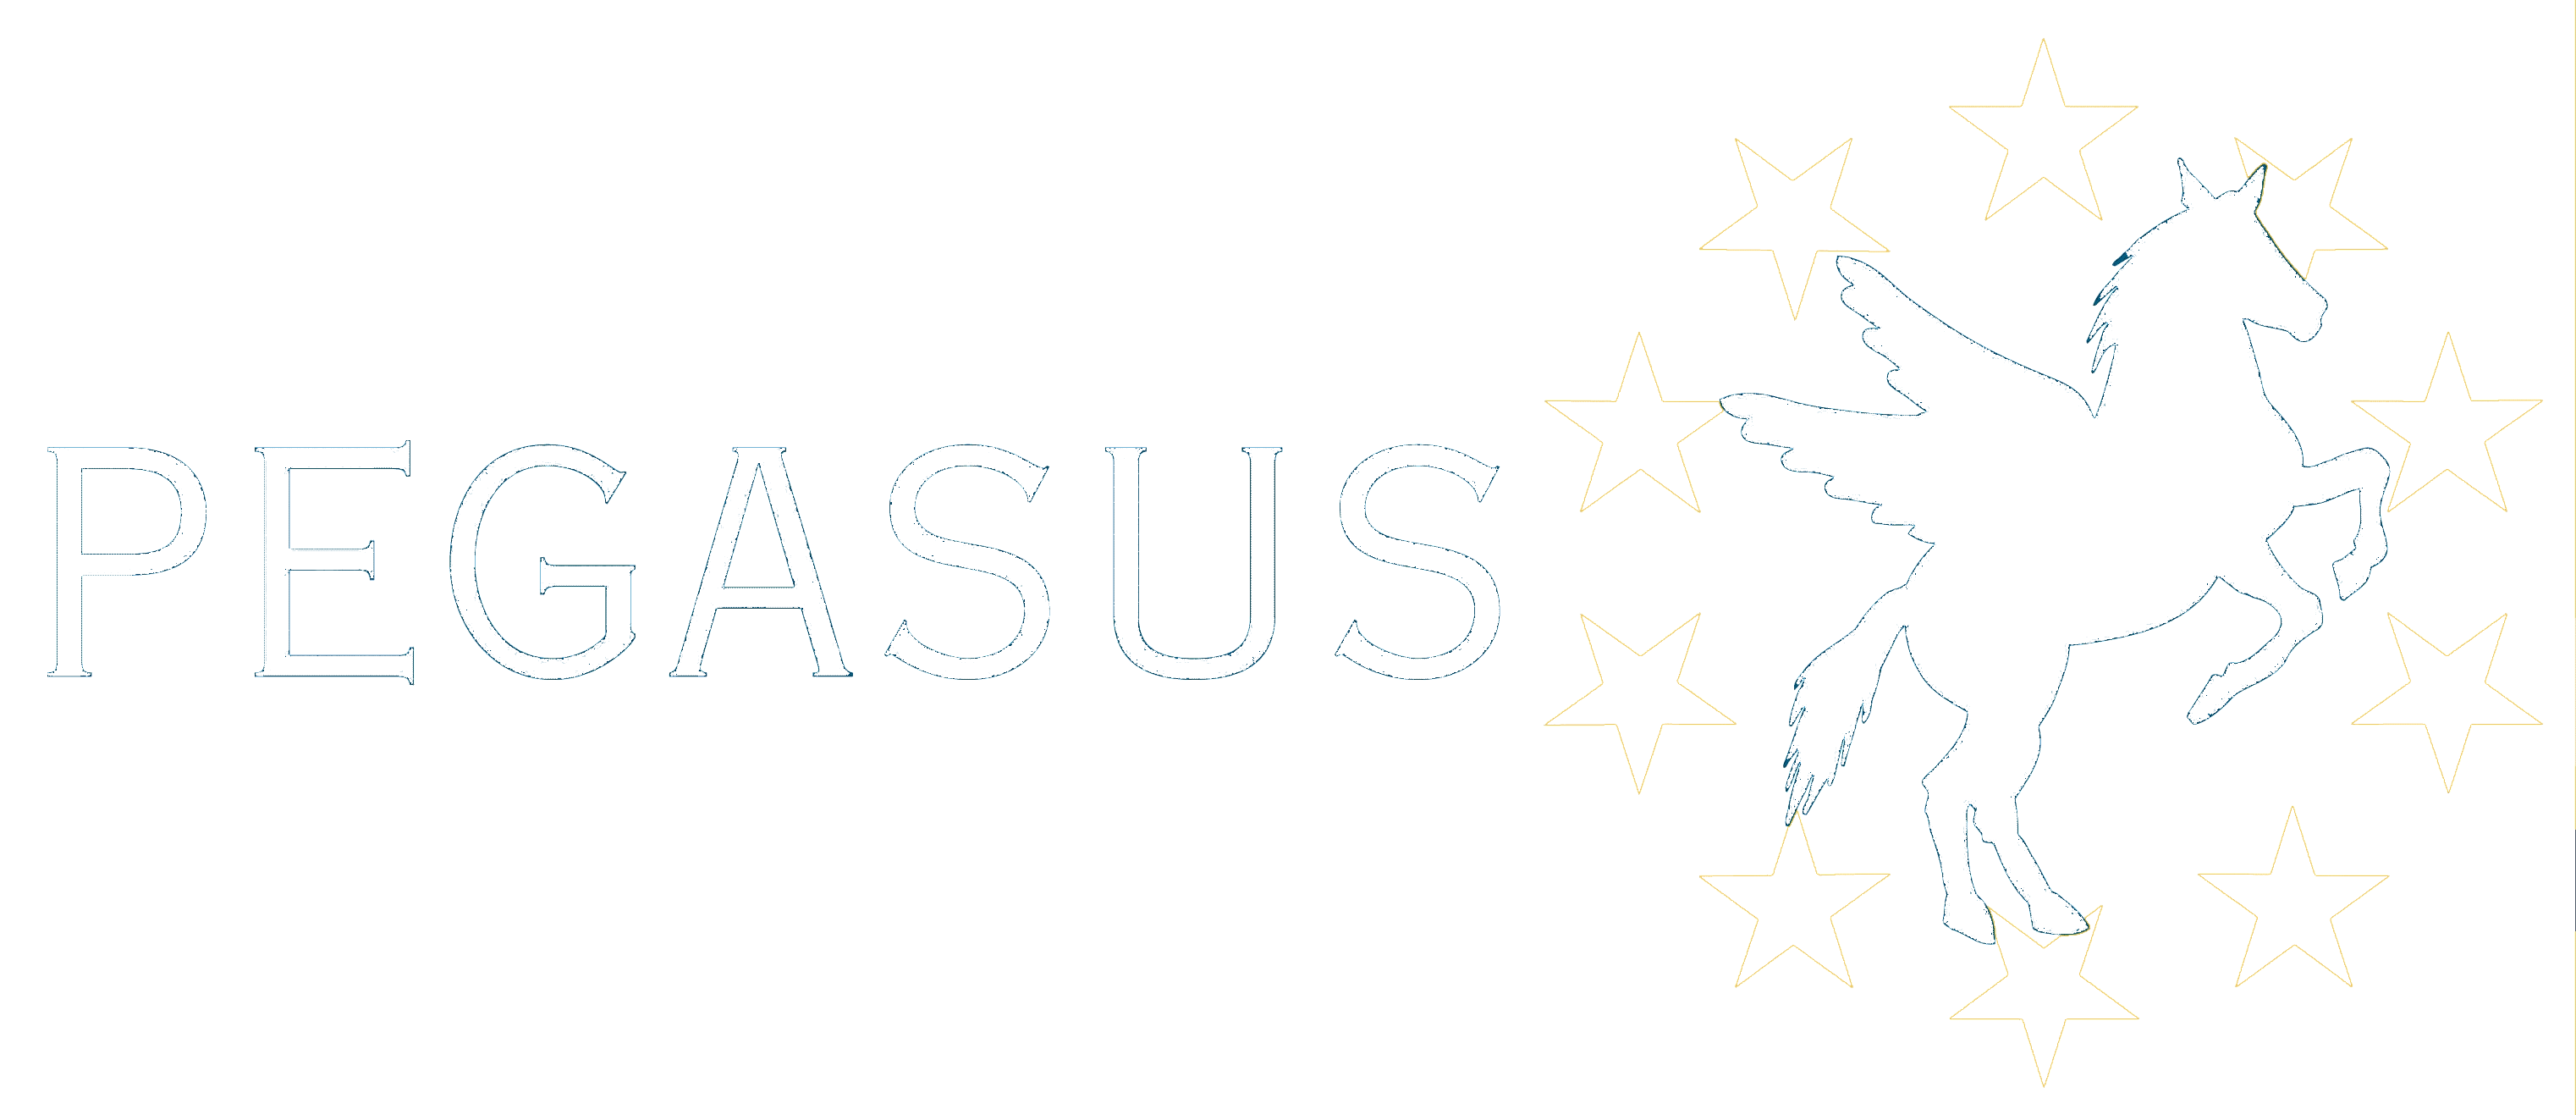 Pegasus Network, (open link in a new window)